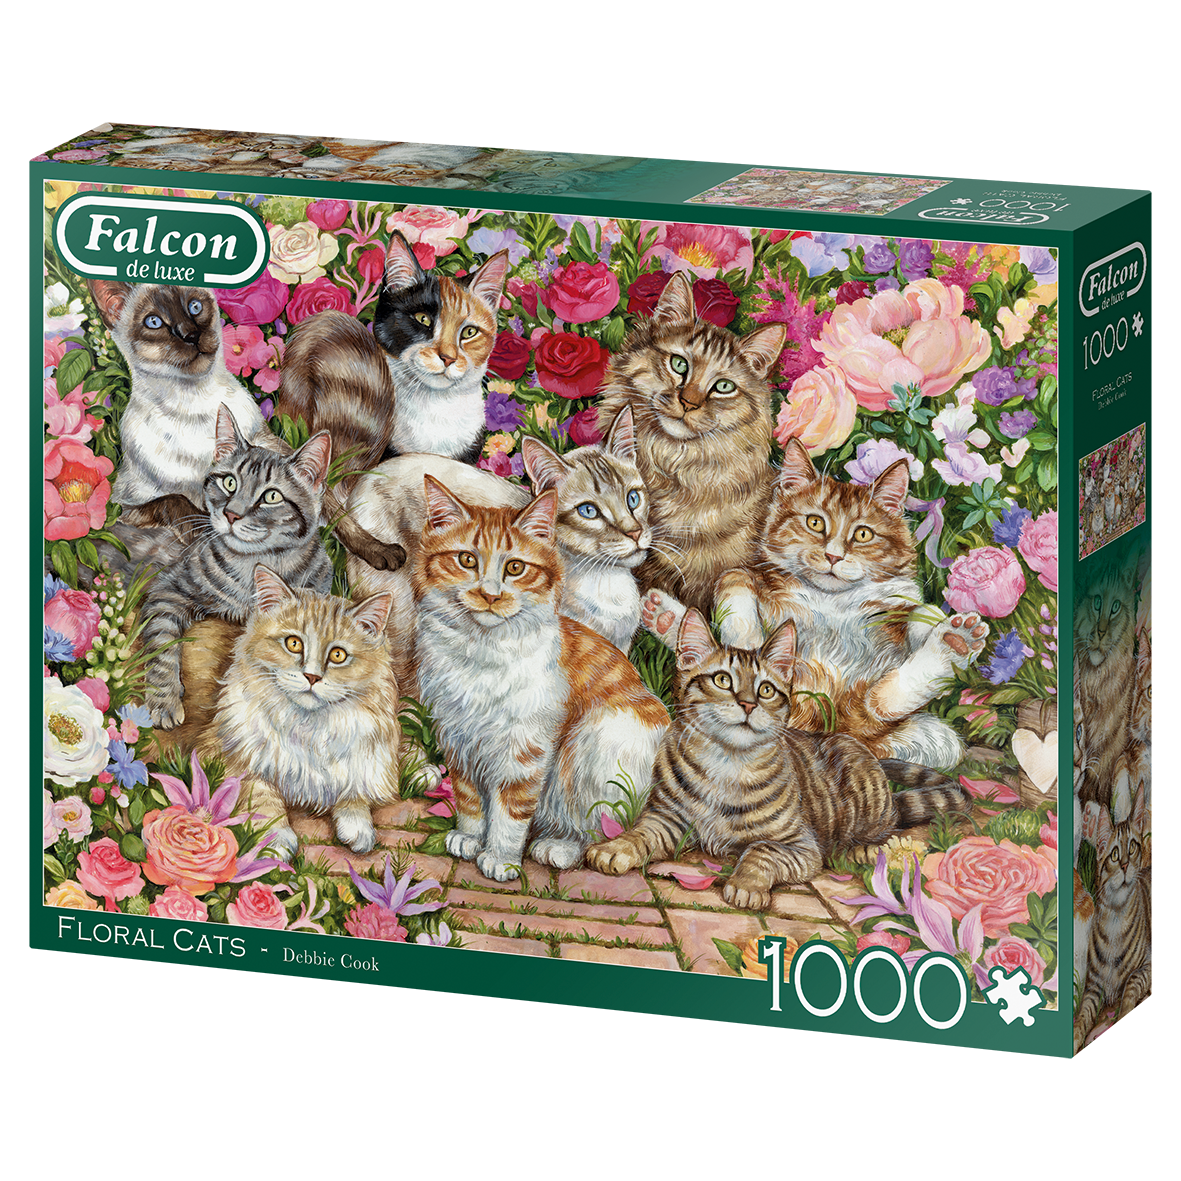 FALCON FLORAL CATS 1000 PIECE JIGSAW PUZZLE